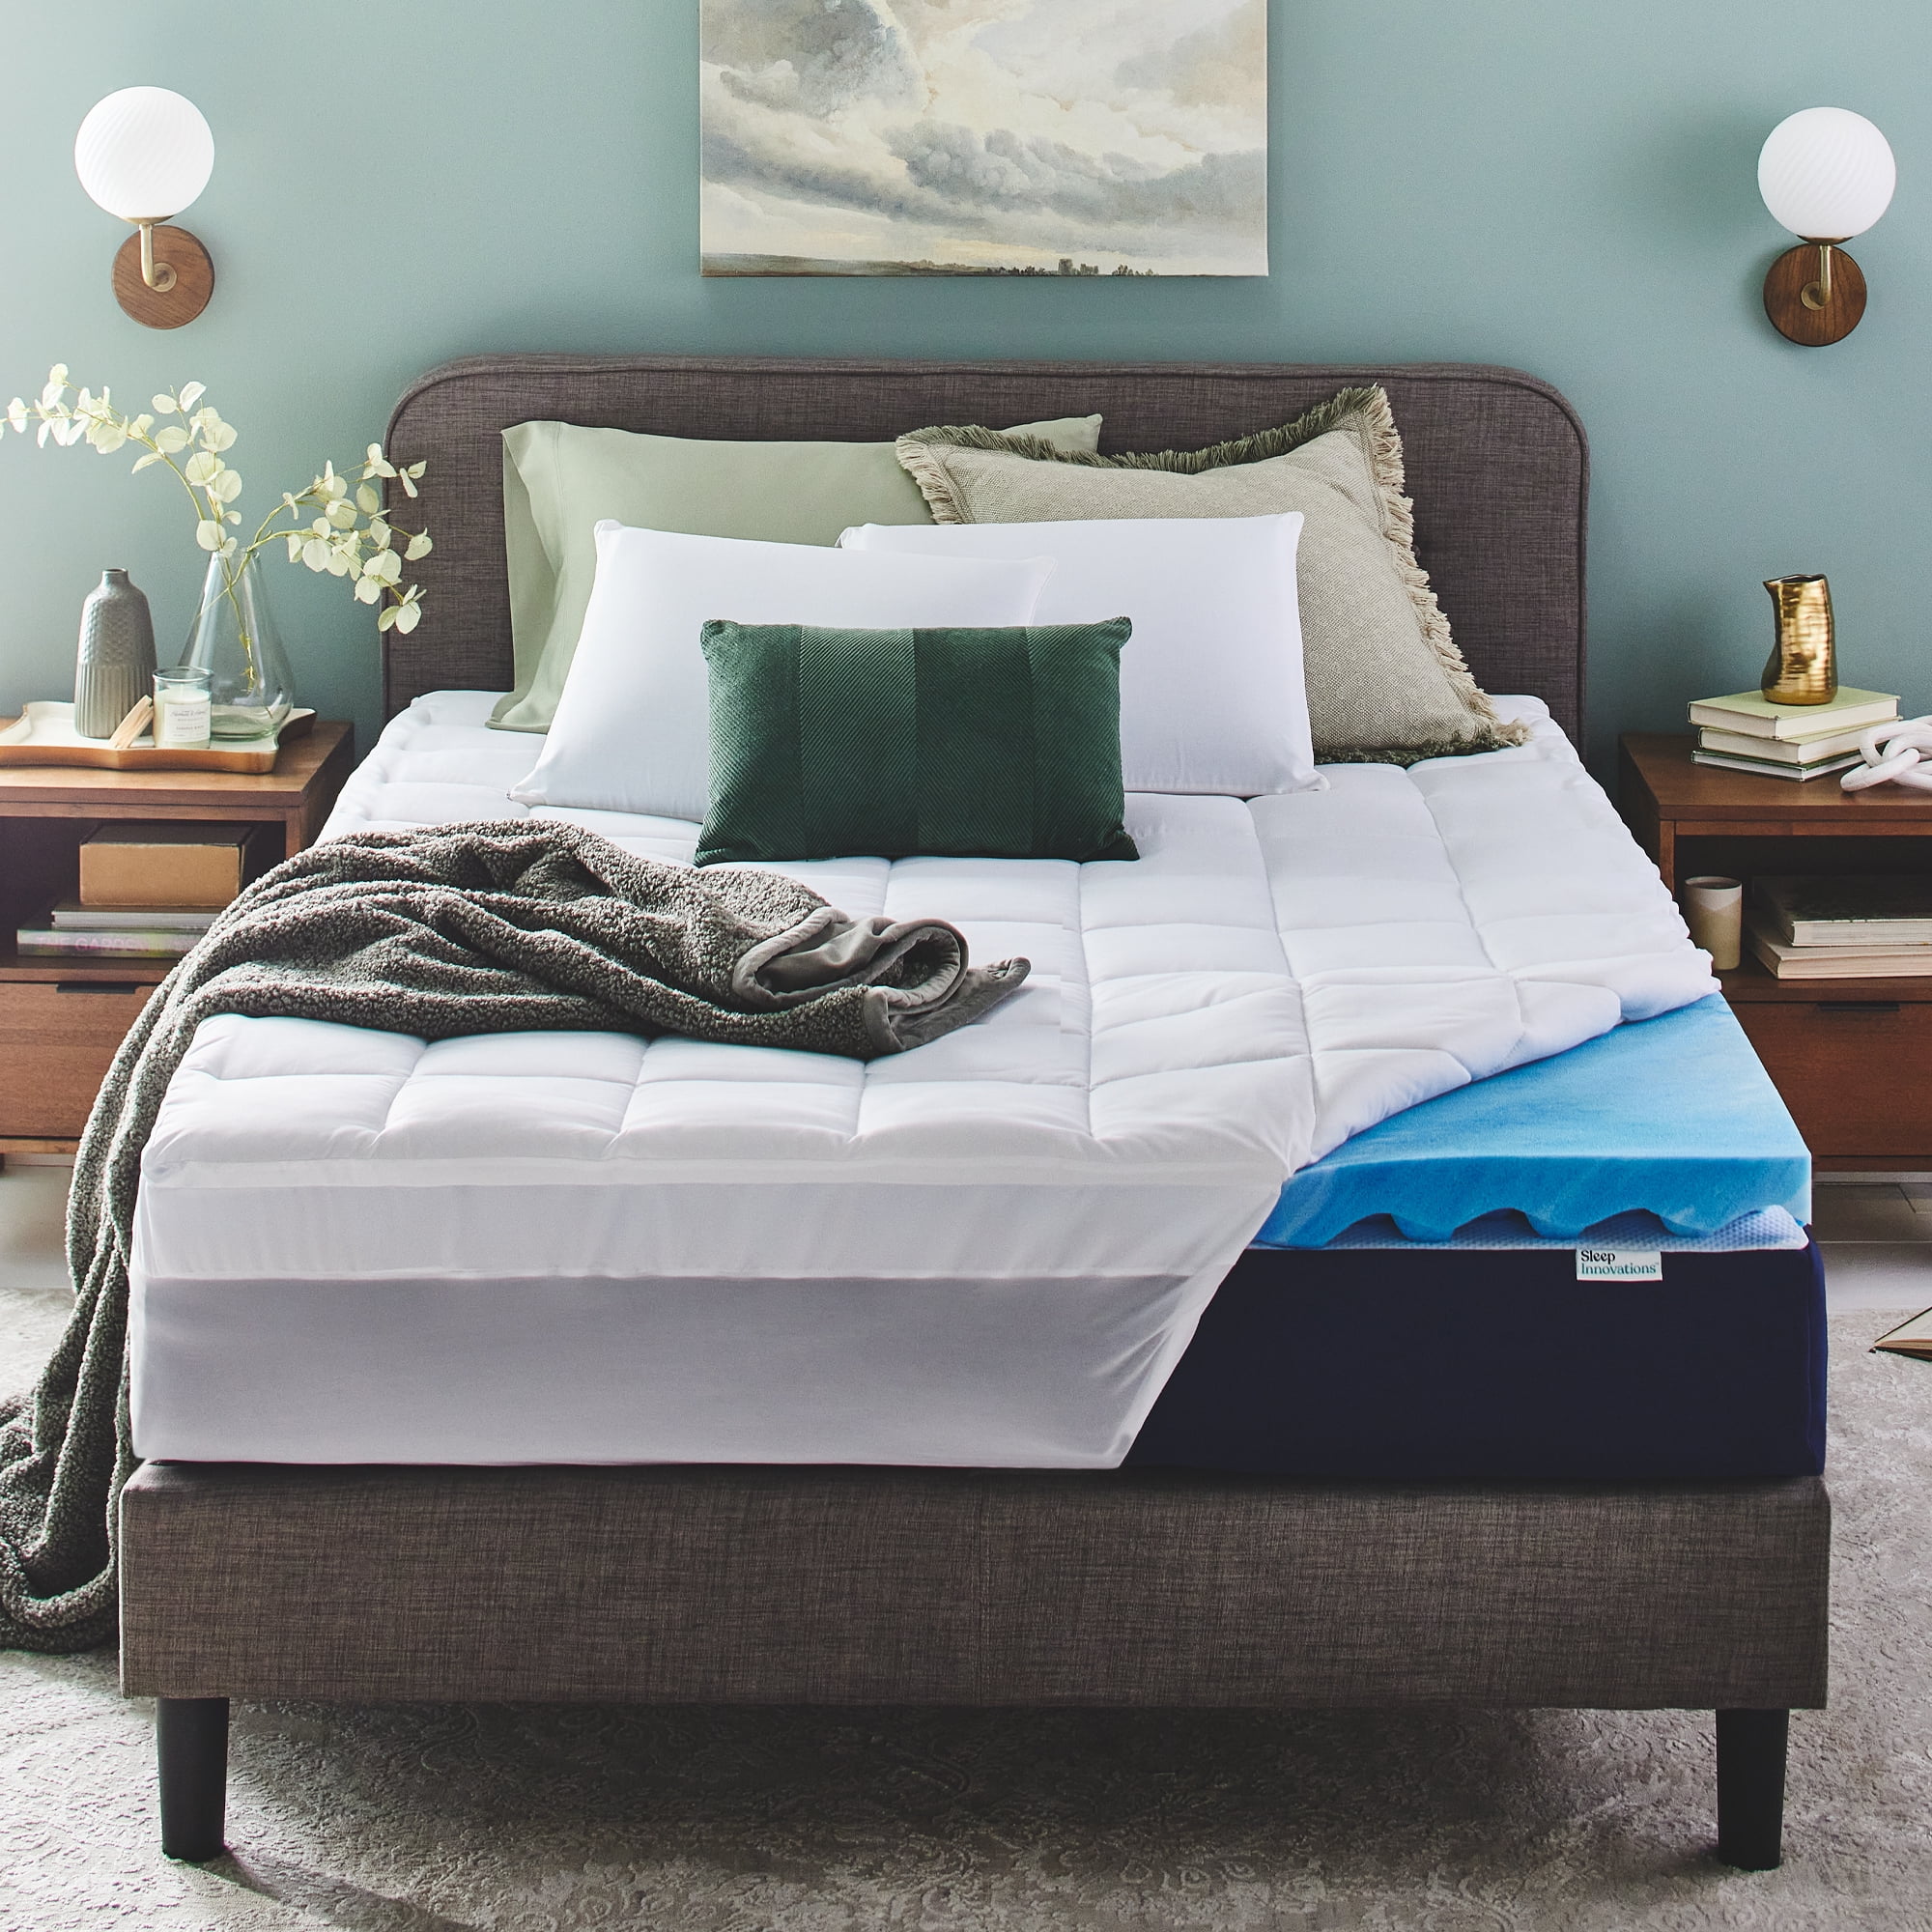 Dual Layer Mattress Topper Bed Pad Memory Foam Gel Plush Pillow Top 4-Inch Thick 